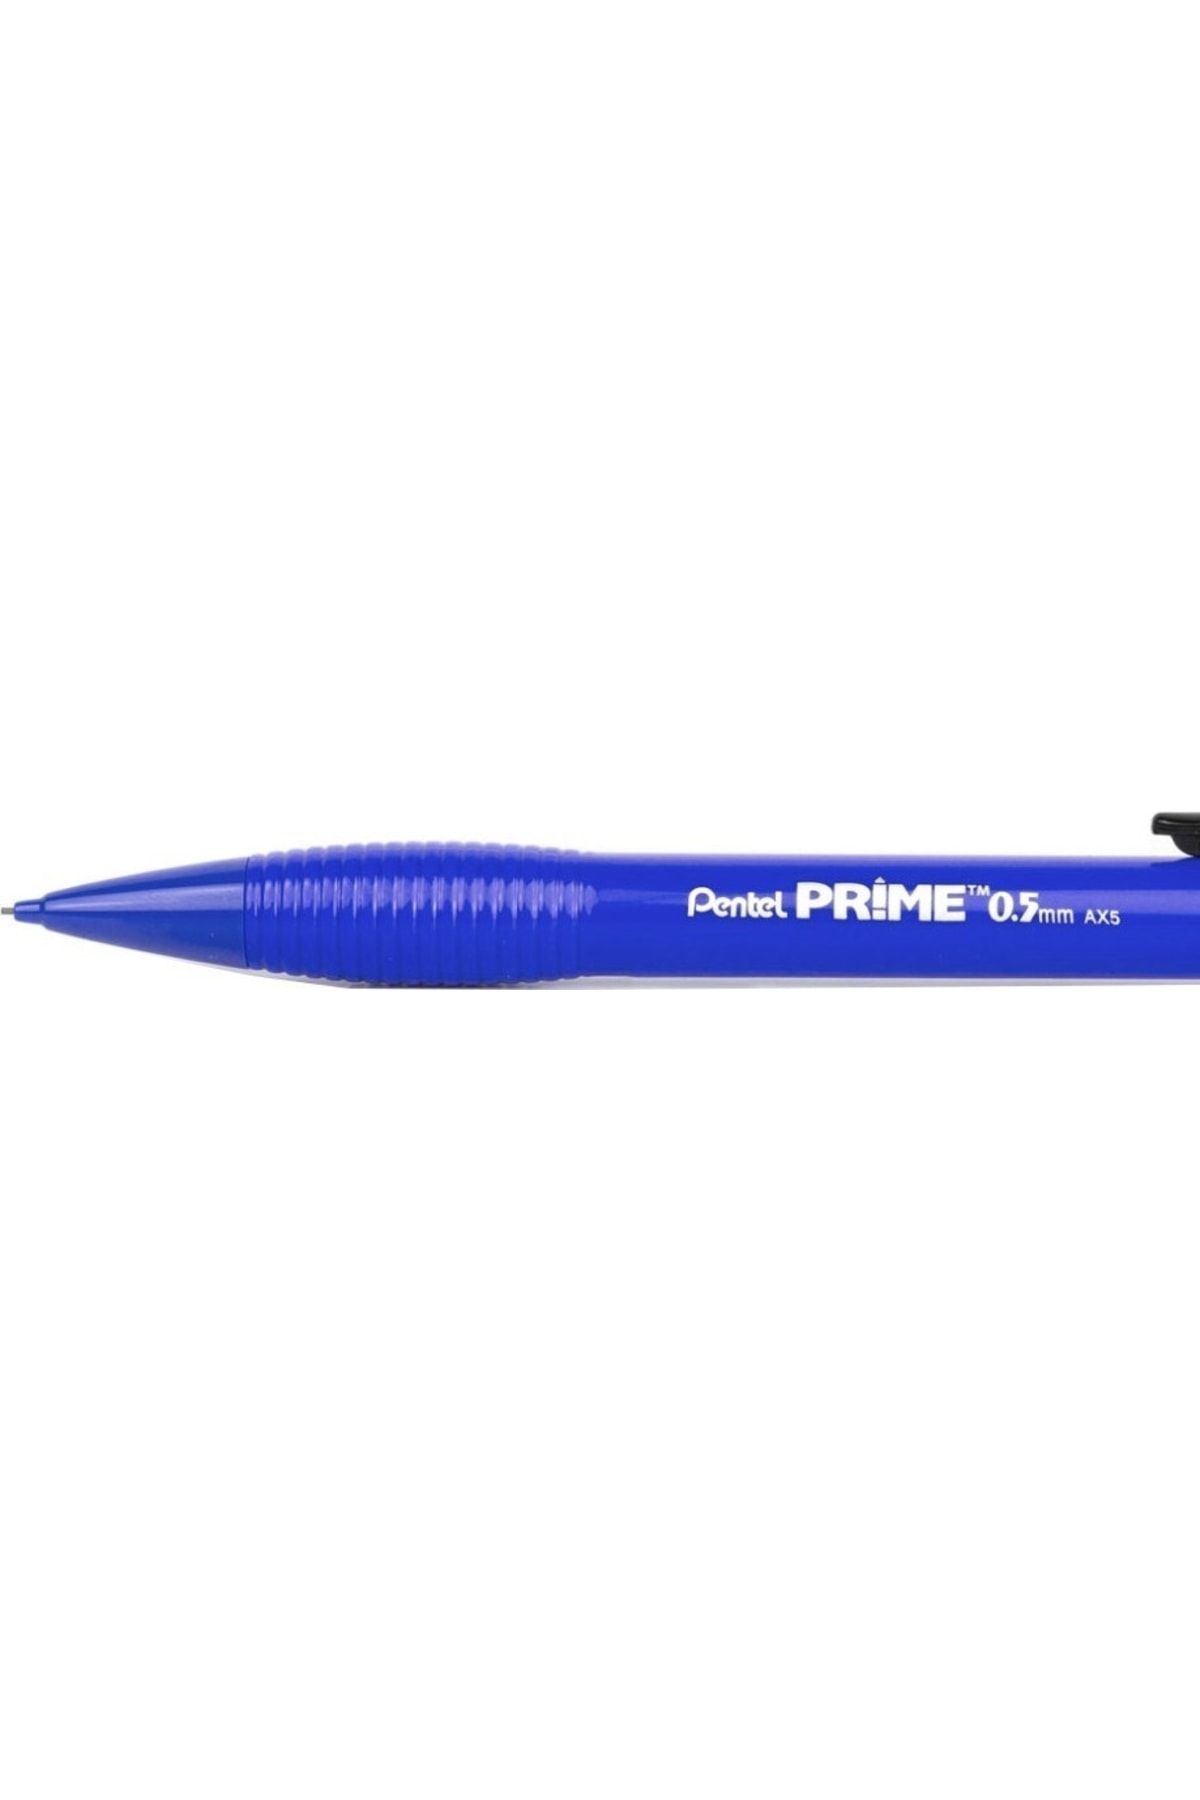 Pentel Prime Ax5 Mekanik Kurşun Kalem 0.5 Mm Mavi